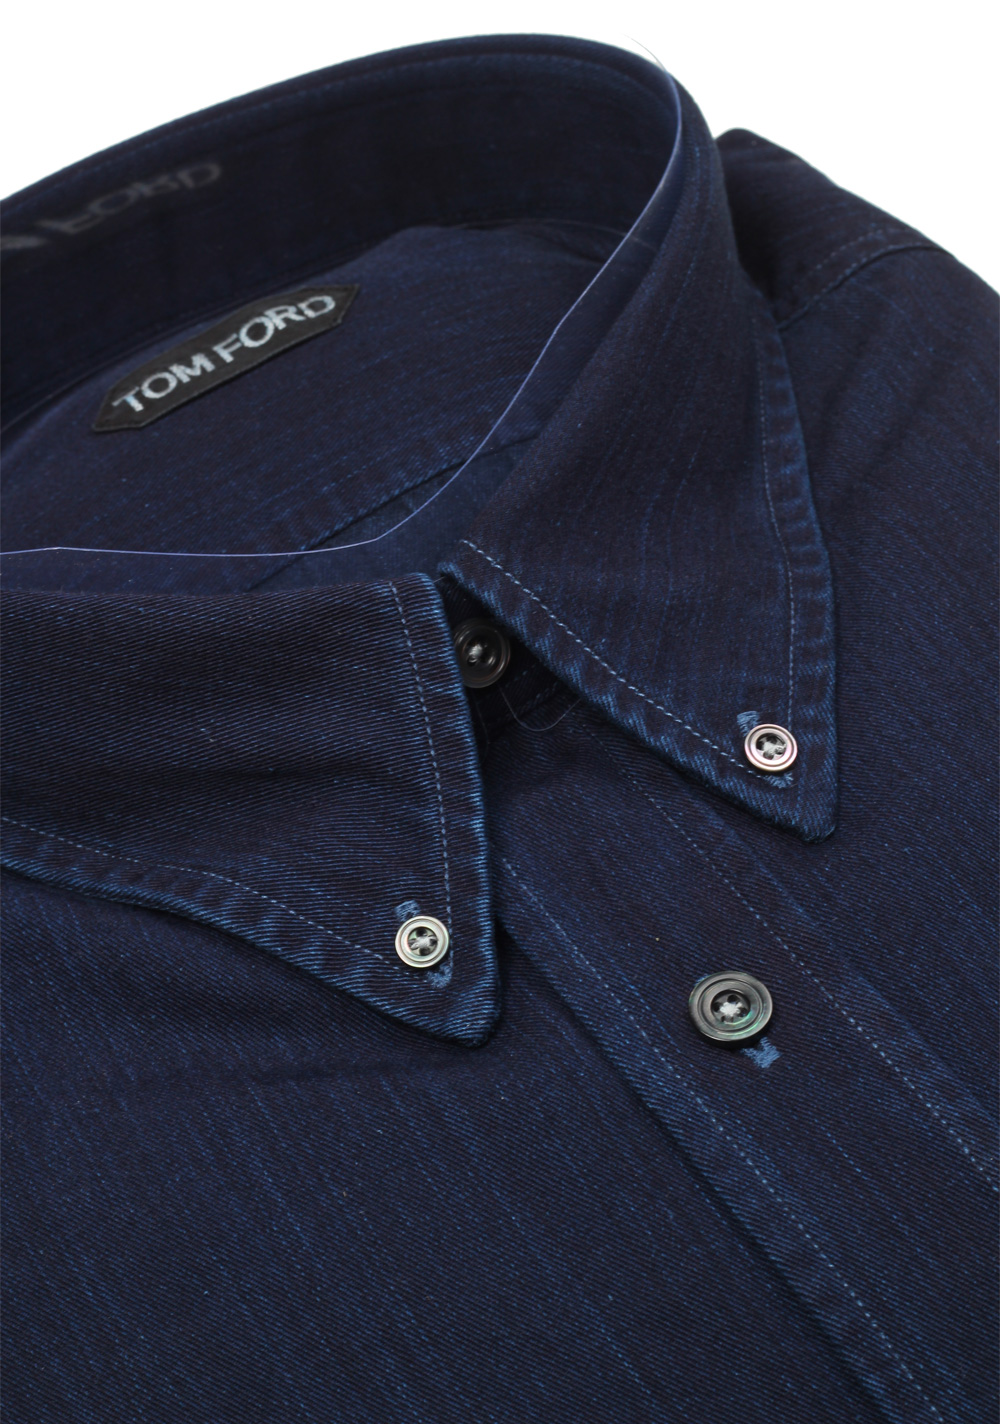 TOM FORD Solid Blue Denim Casual Button Down Shirt Size 46 / 18,5 U.S. | Costume Limité